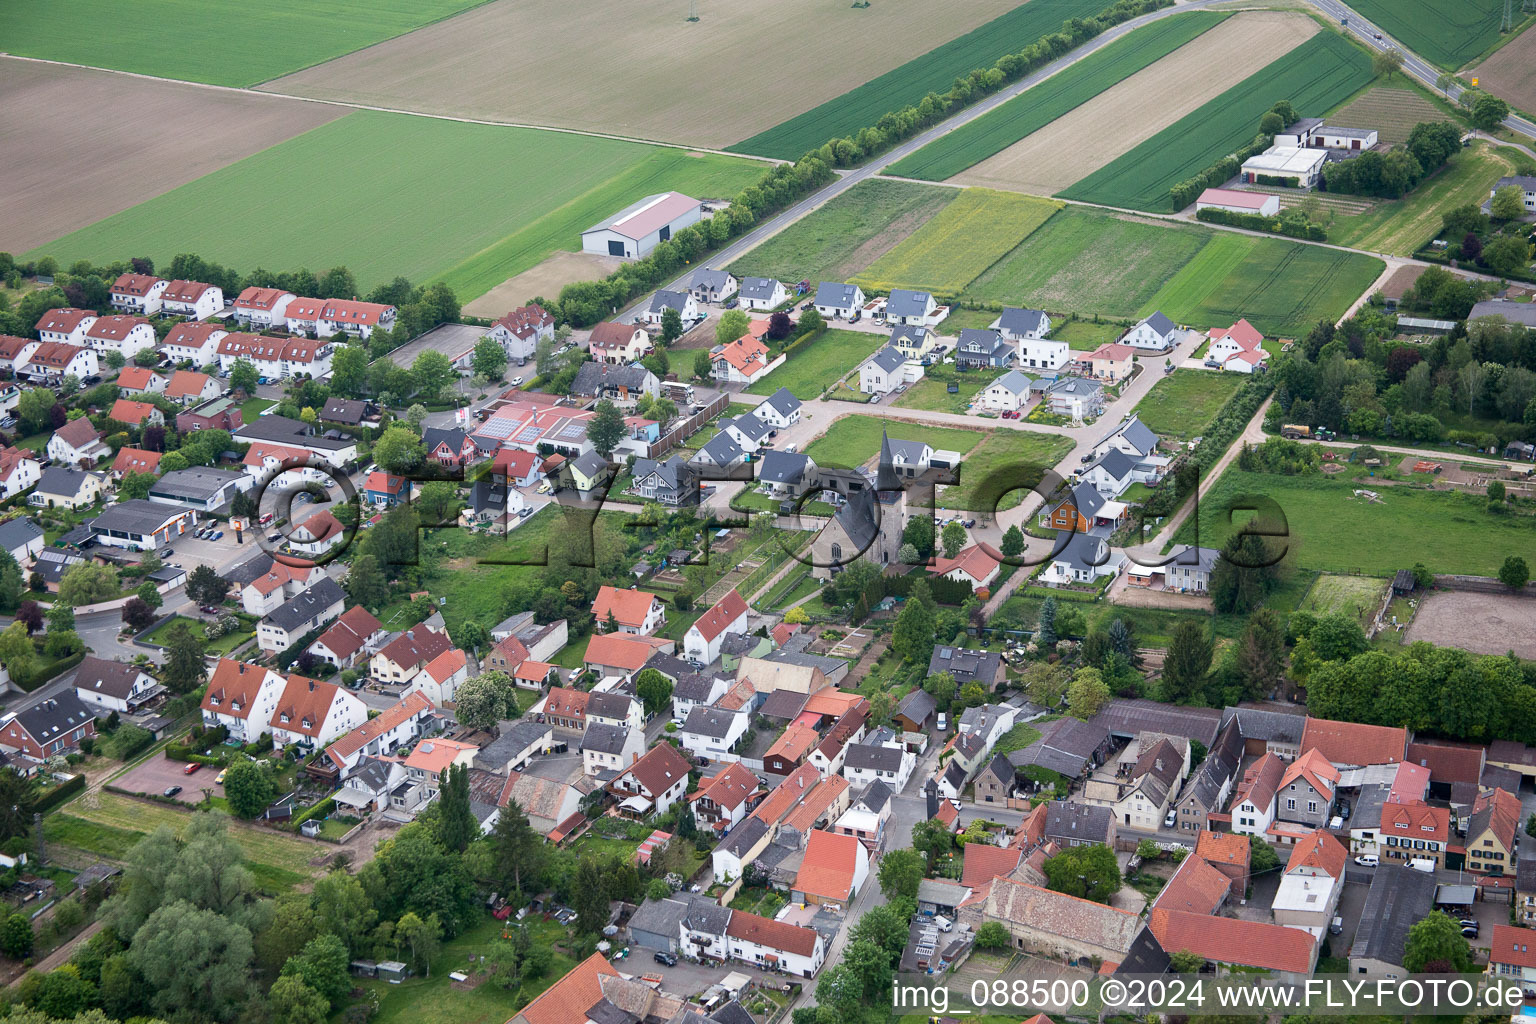 Aerial view of Village view in Dexheim in the state Rhineland-Palatinate